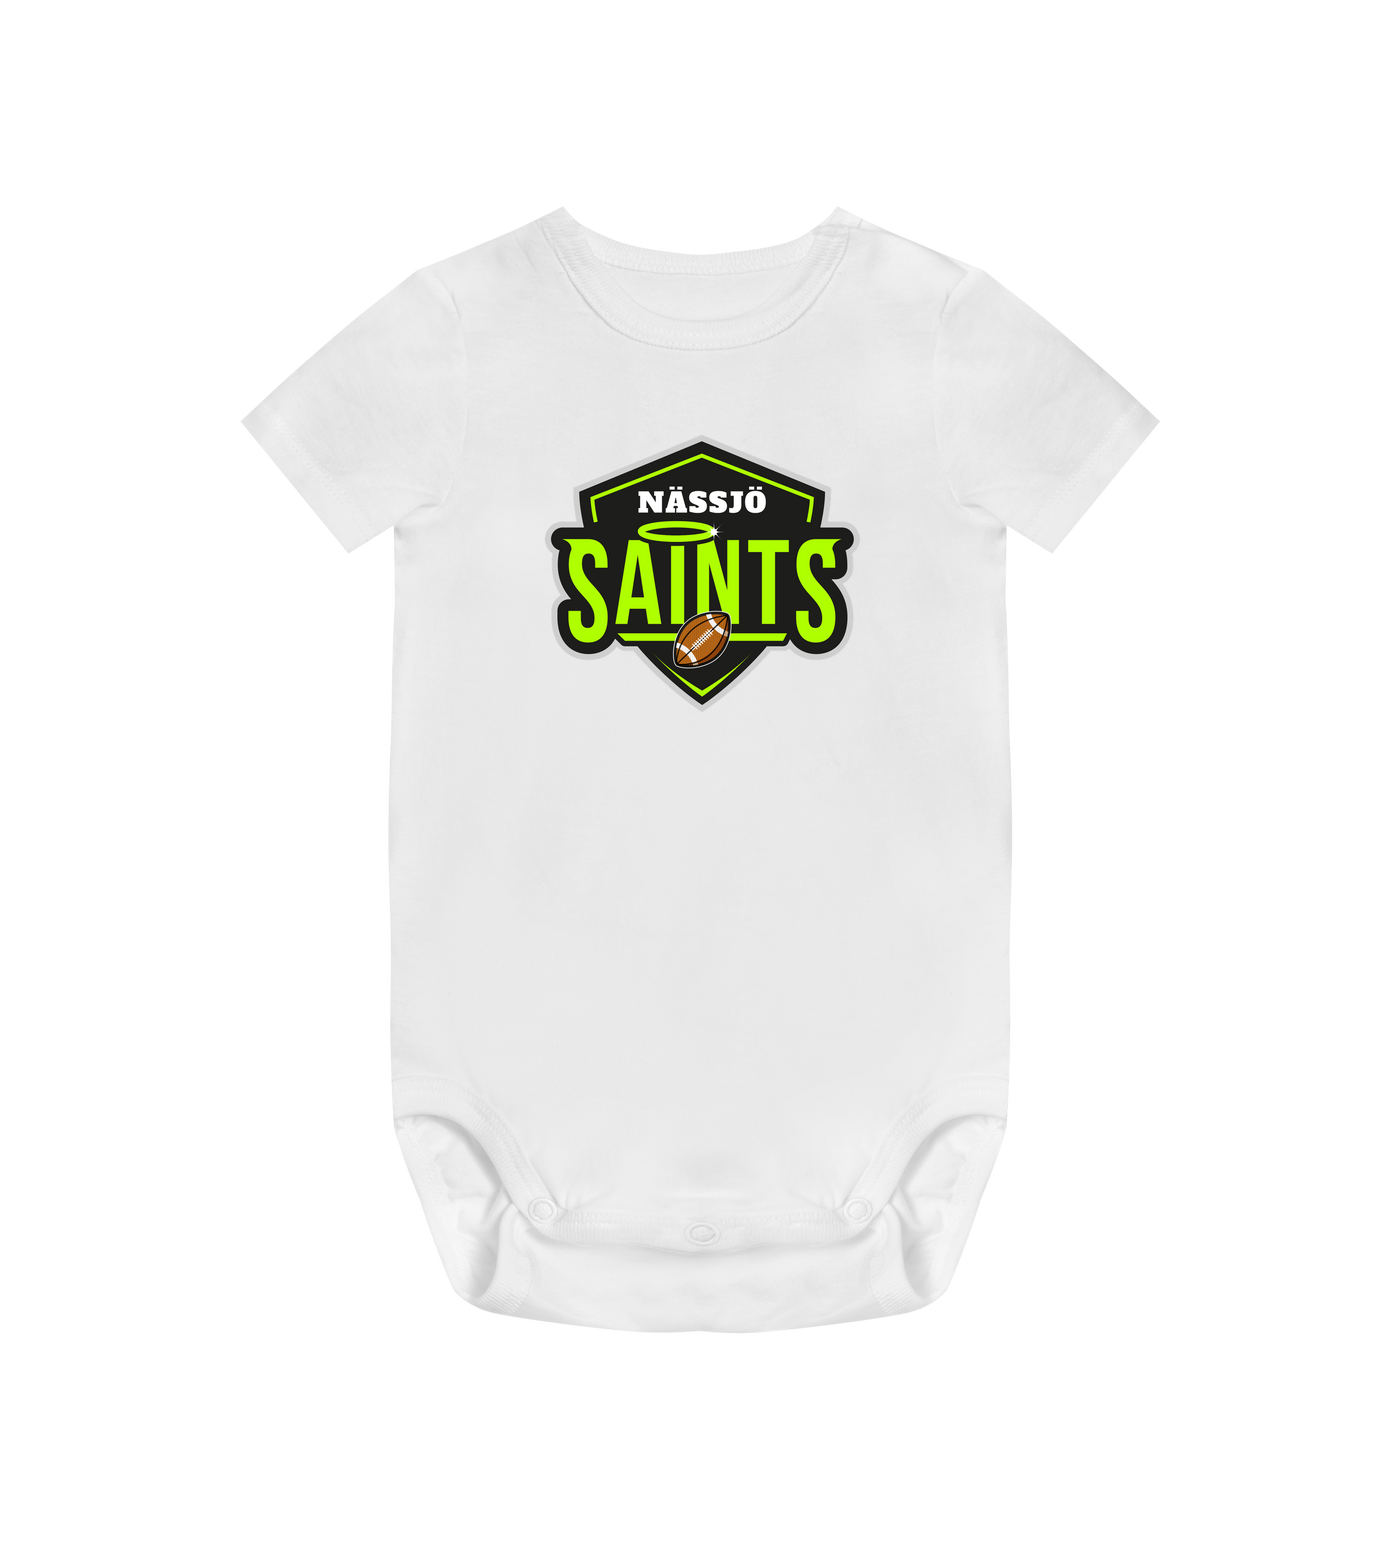 Nässjö Saints Baby Bodysuit - Premium body from REYRR STUDIO - Shop now at Reyrr Athletics